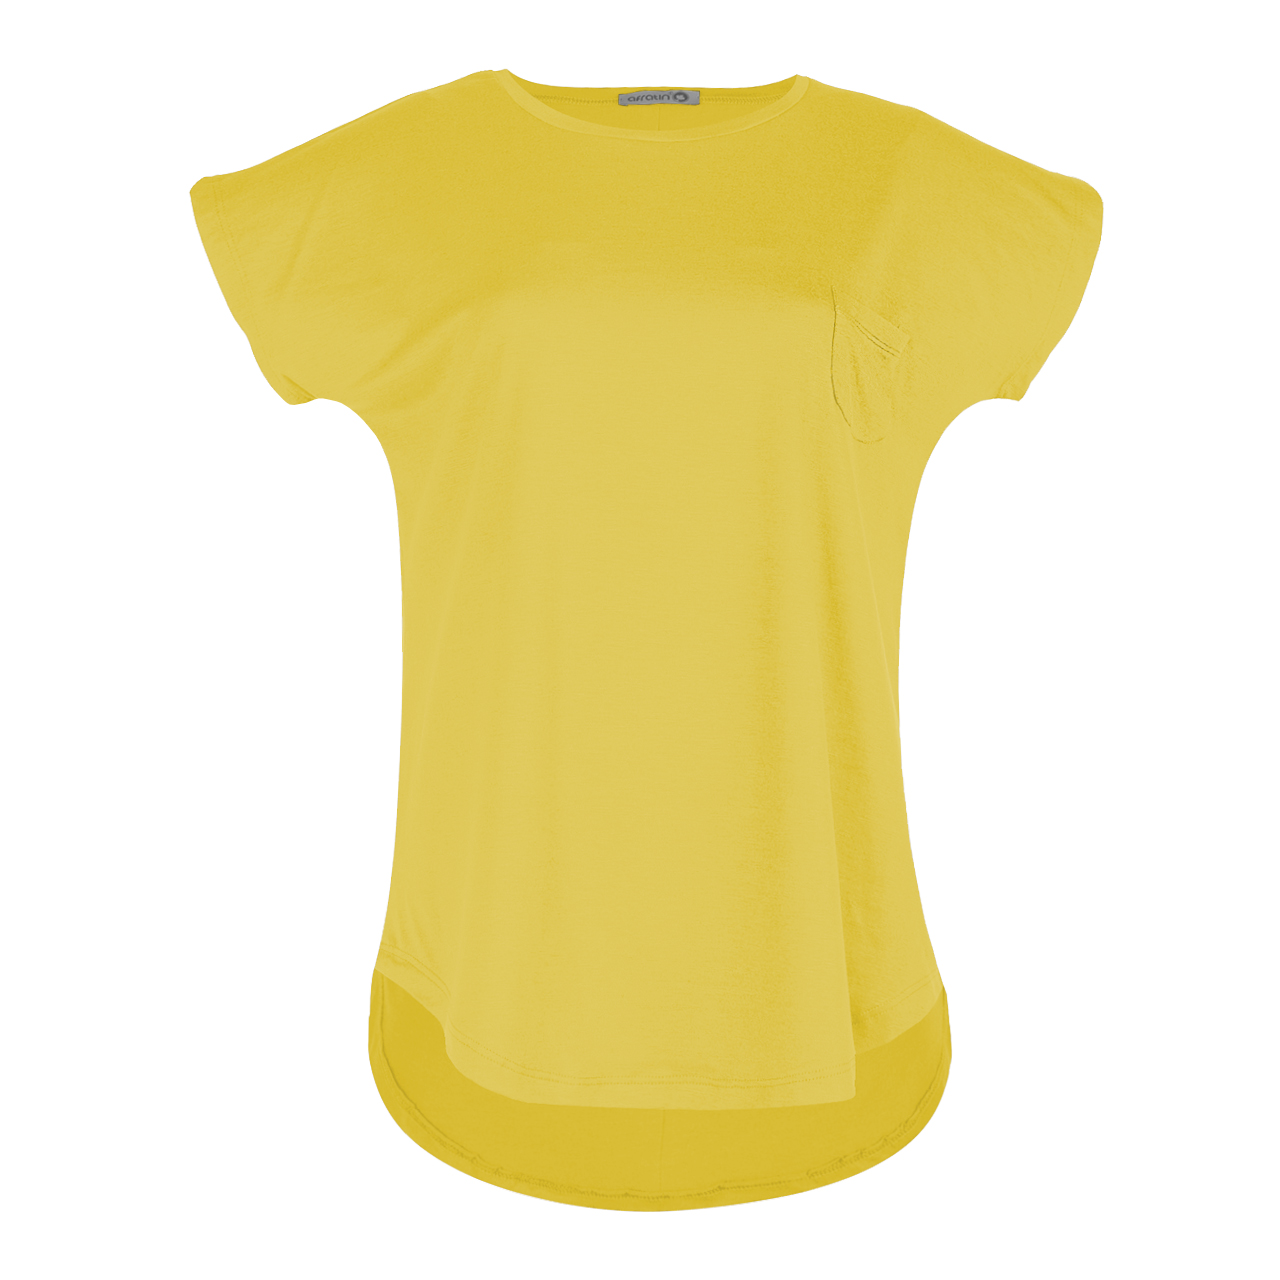  تی شرت زنانه افراتین کد 2517 رنگ زرد